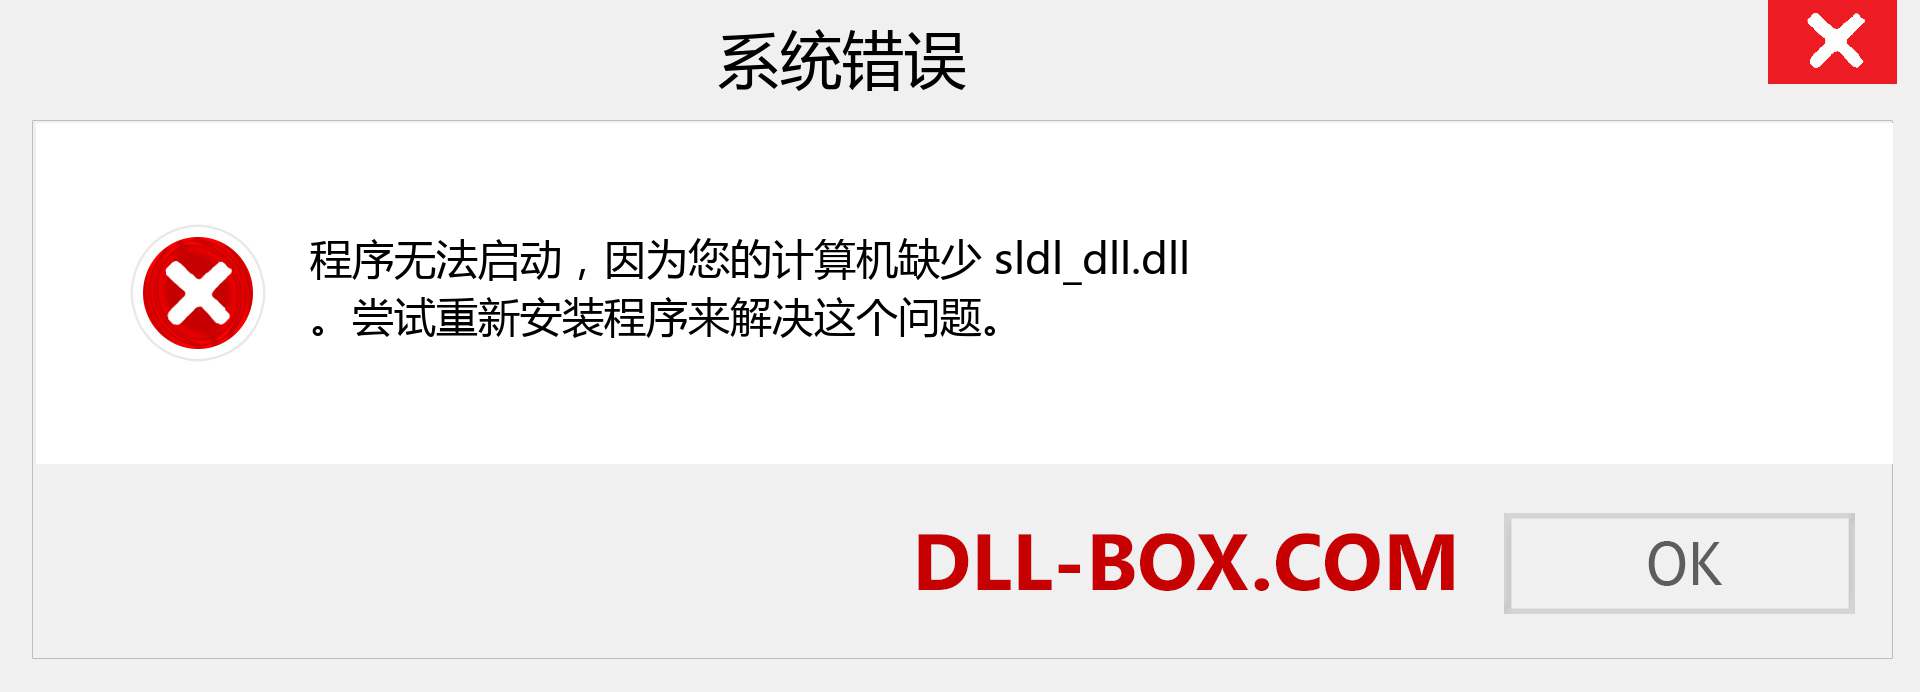 sldl_dll.dll 文件丢失？。 适用于 Windows 7、8、10 的下载 - 修复 Windows、照片、图像上的 sldl_dll dll 丢失错误